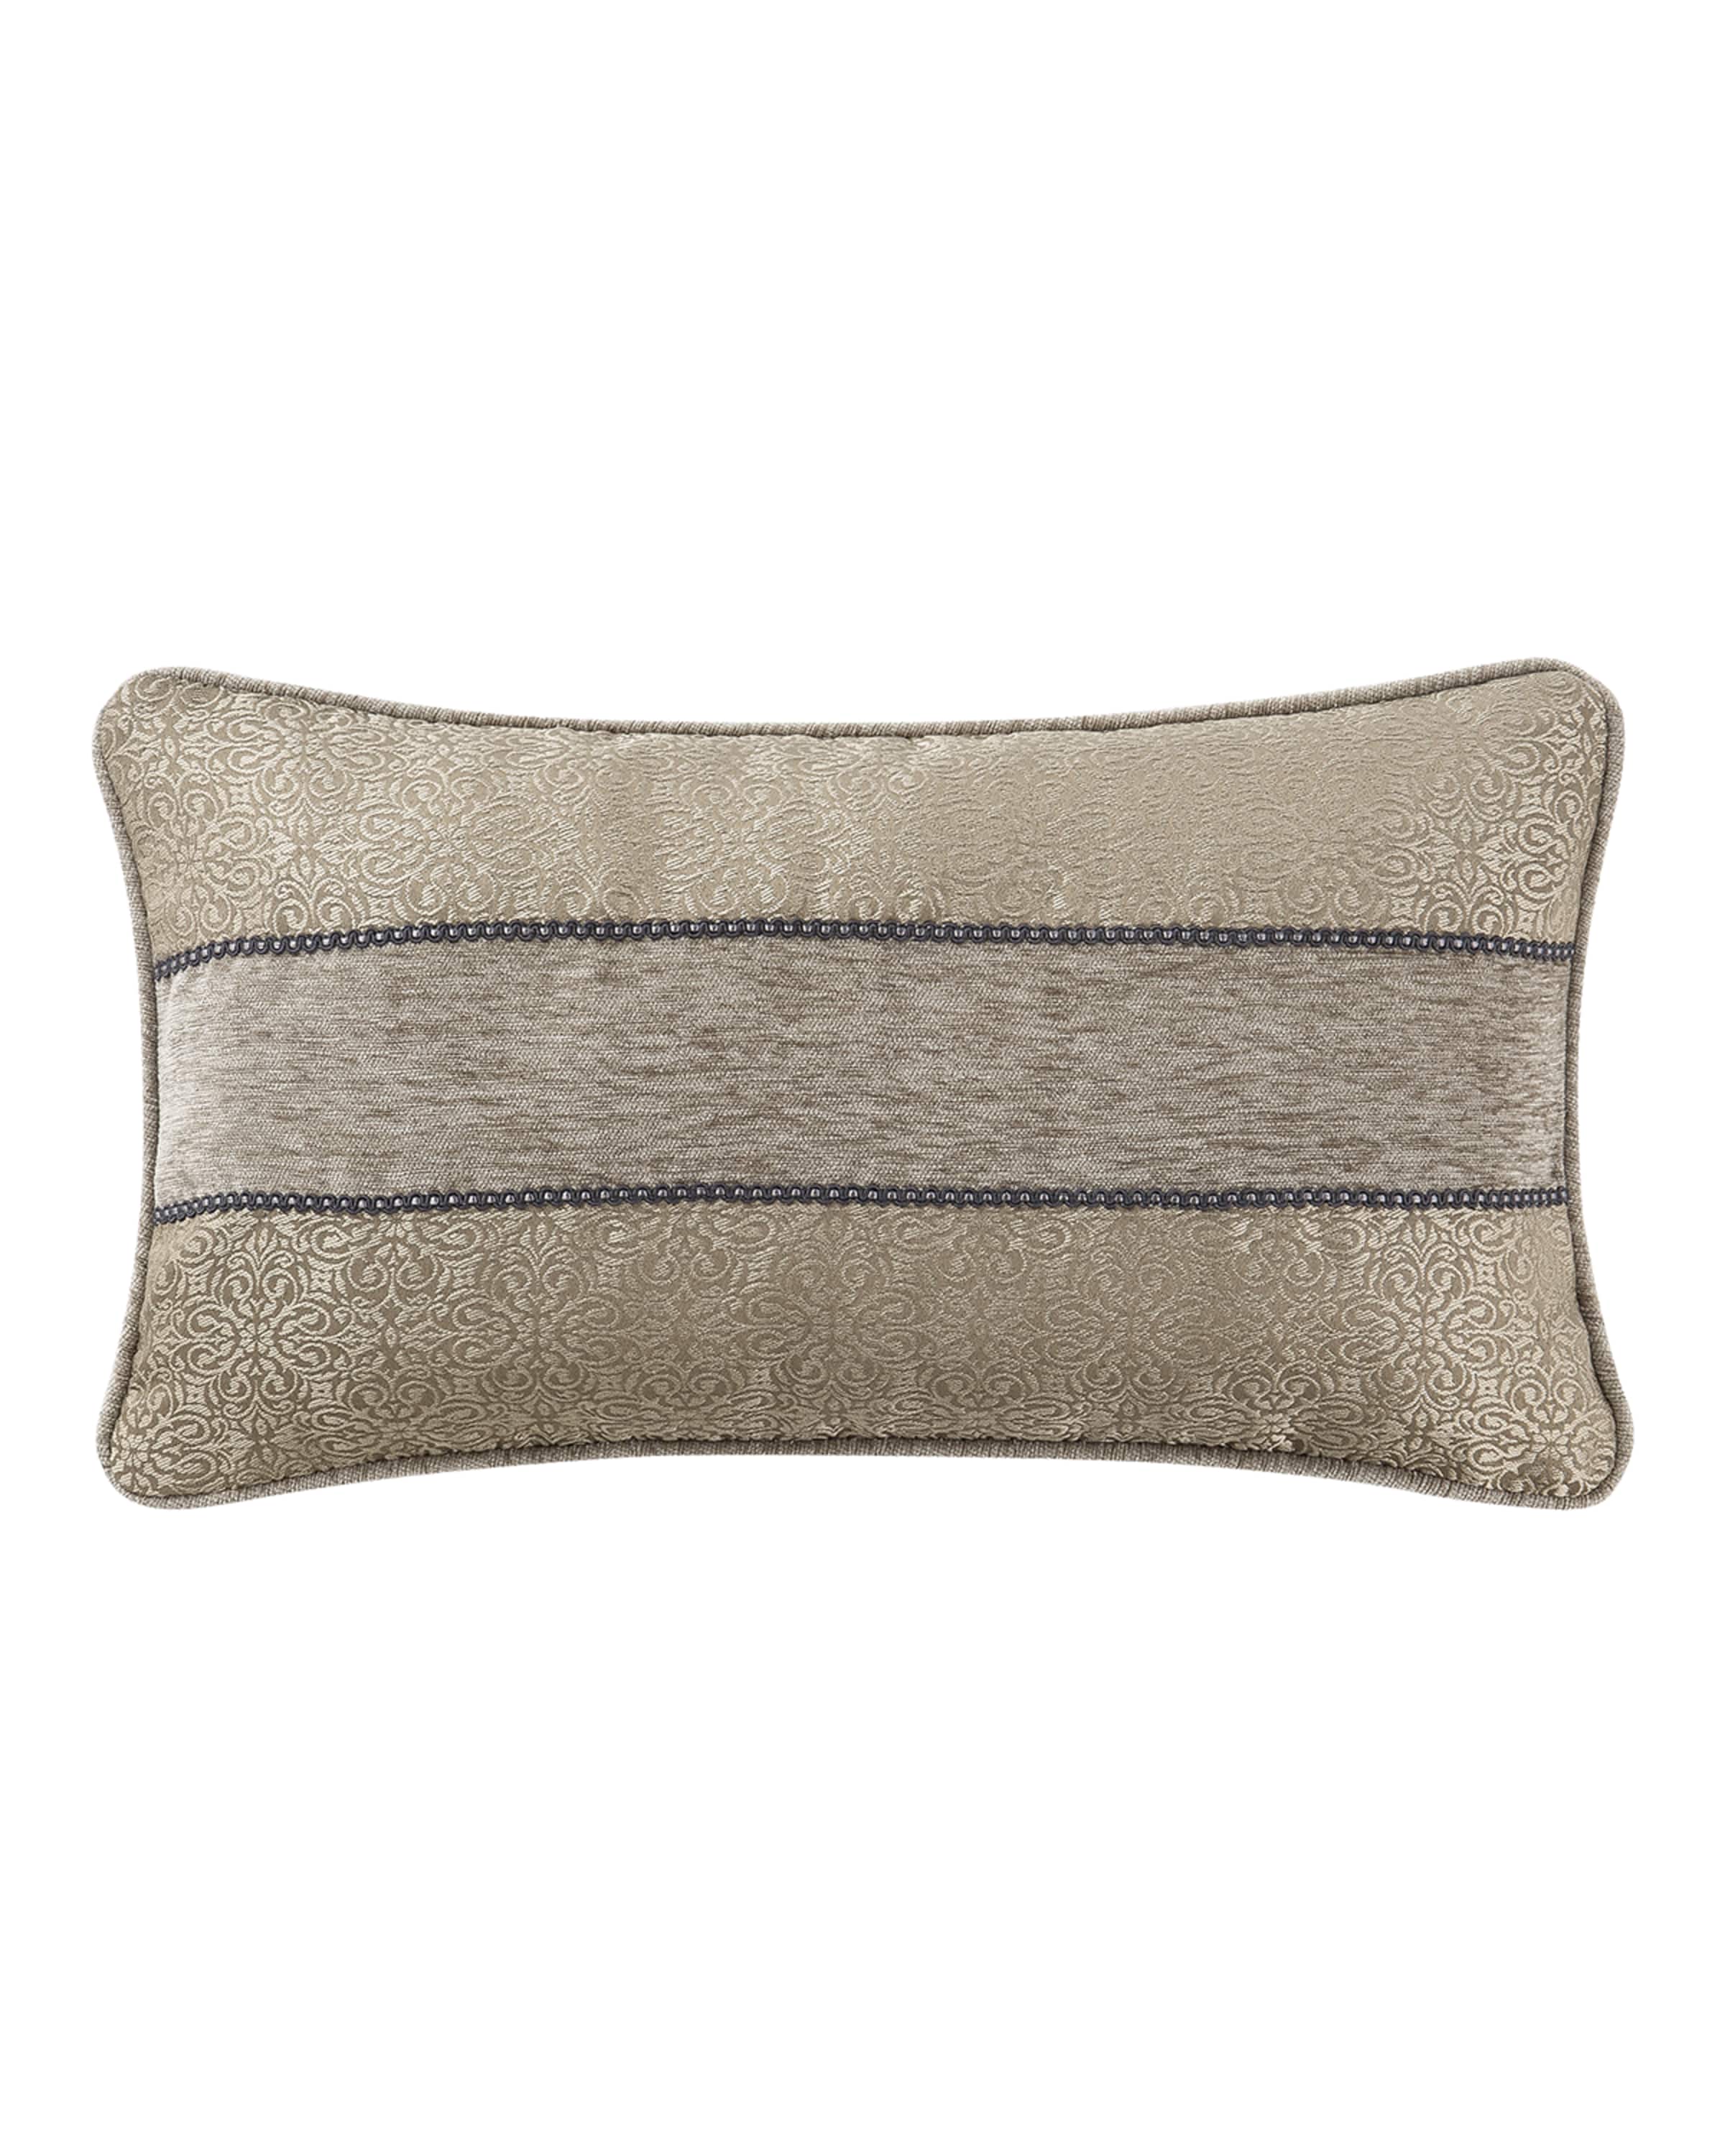 Waterford Carrick 11x20 Decorative Pillow